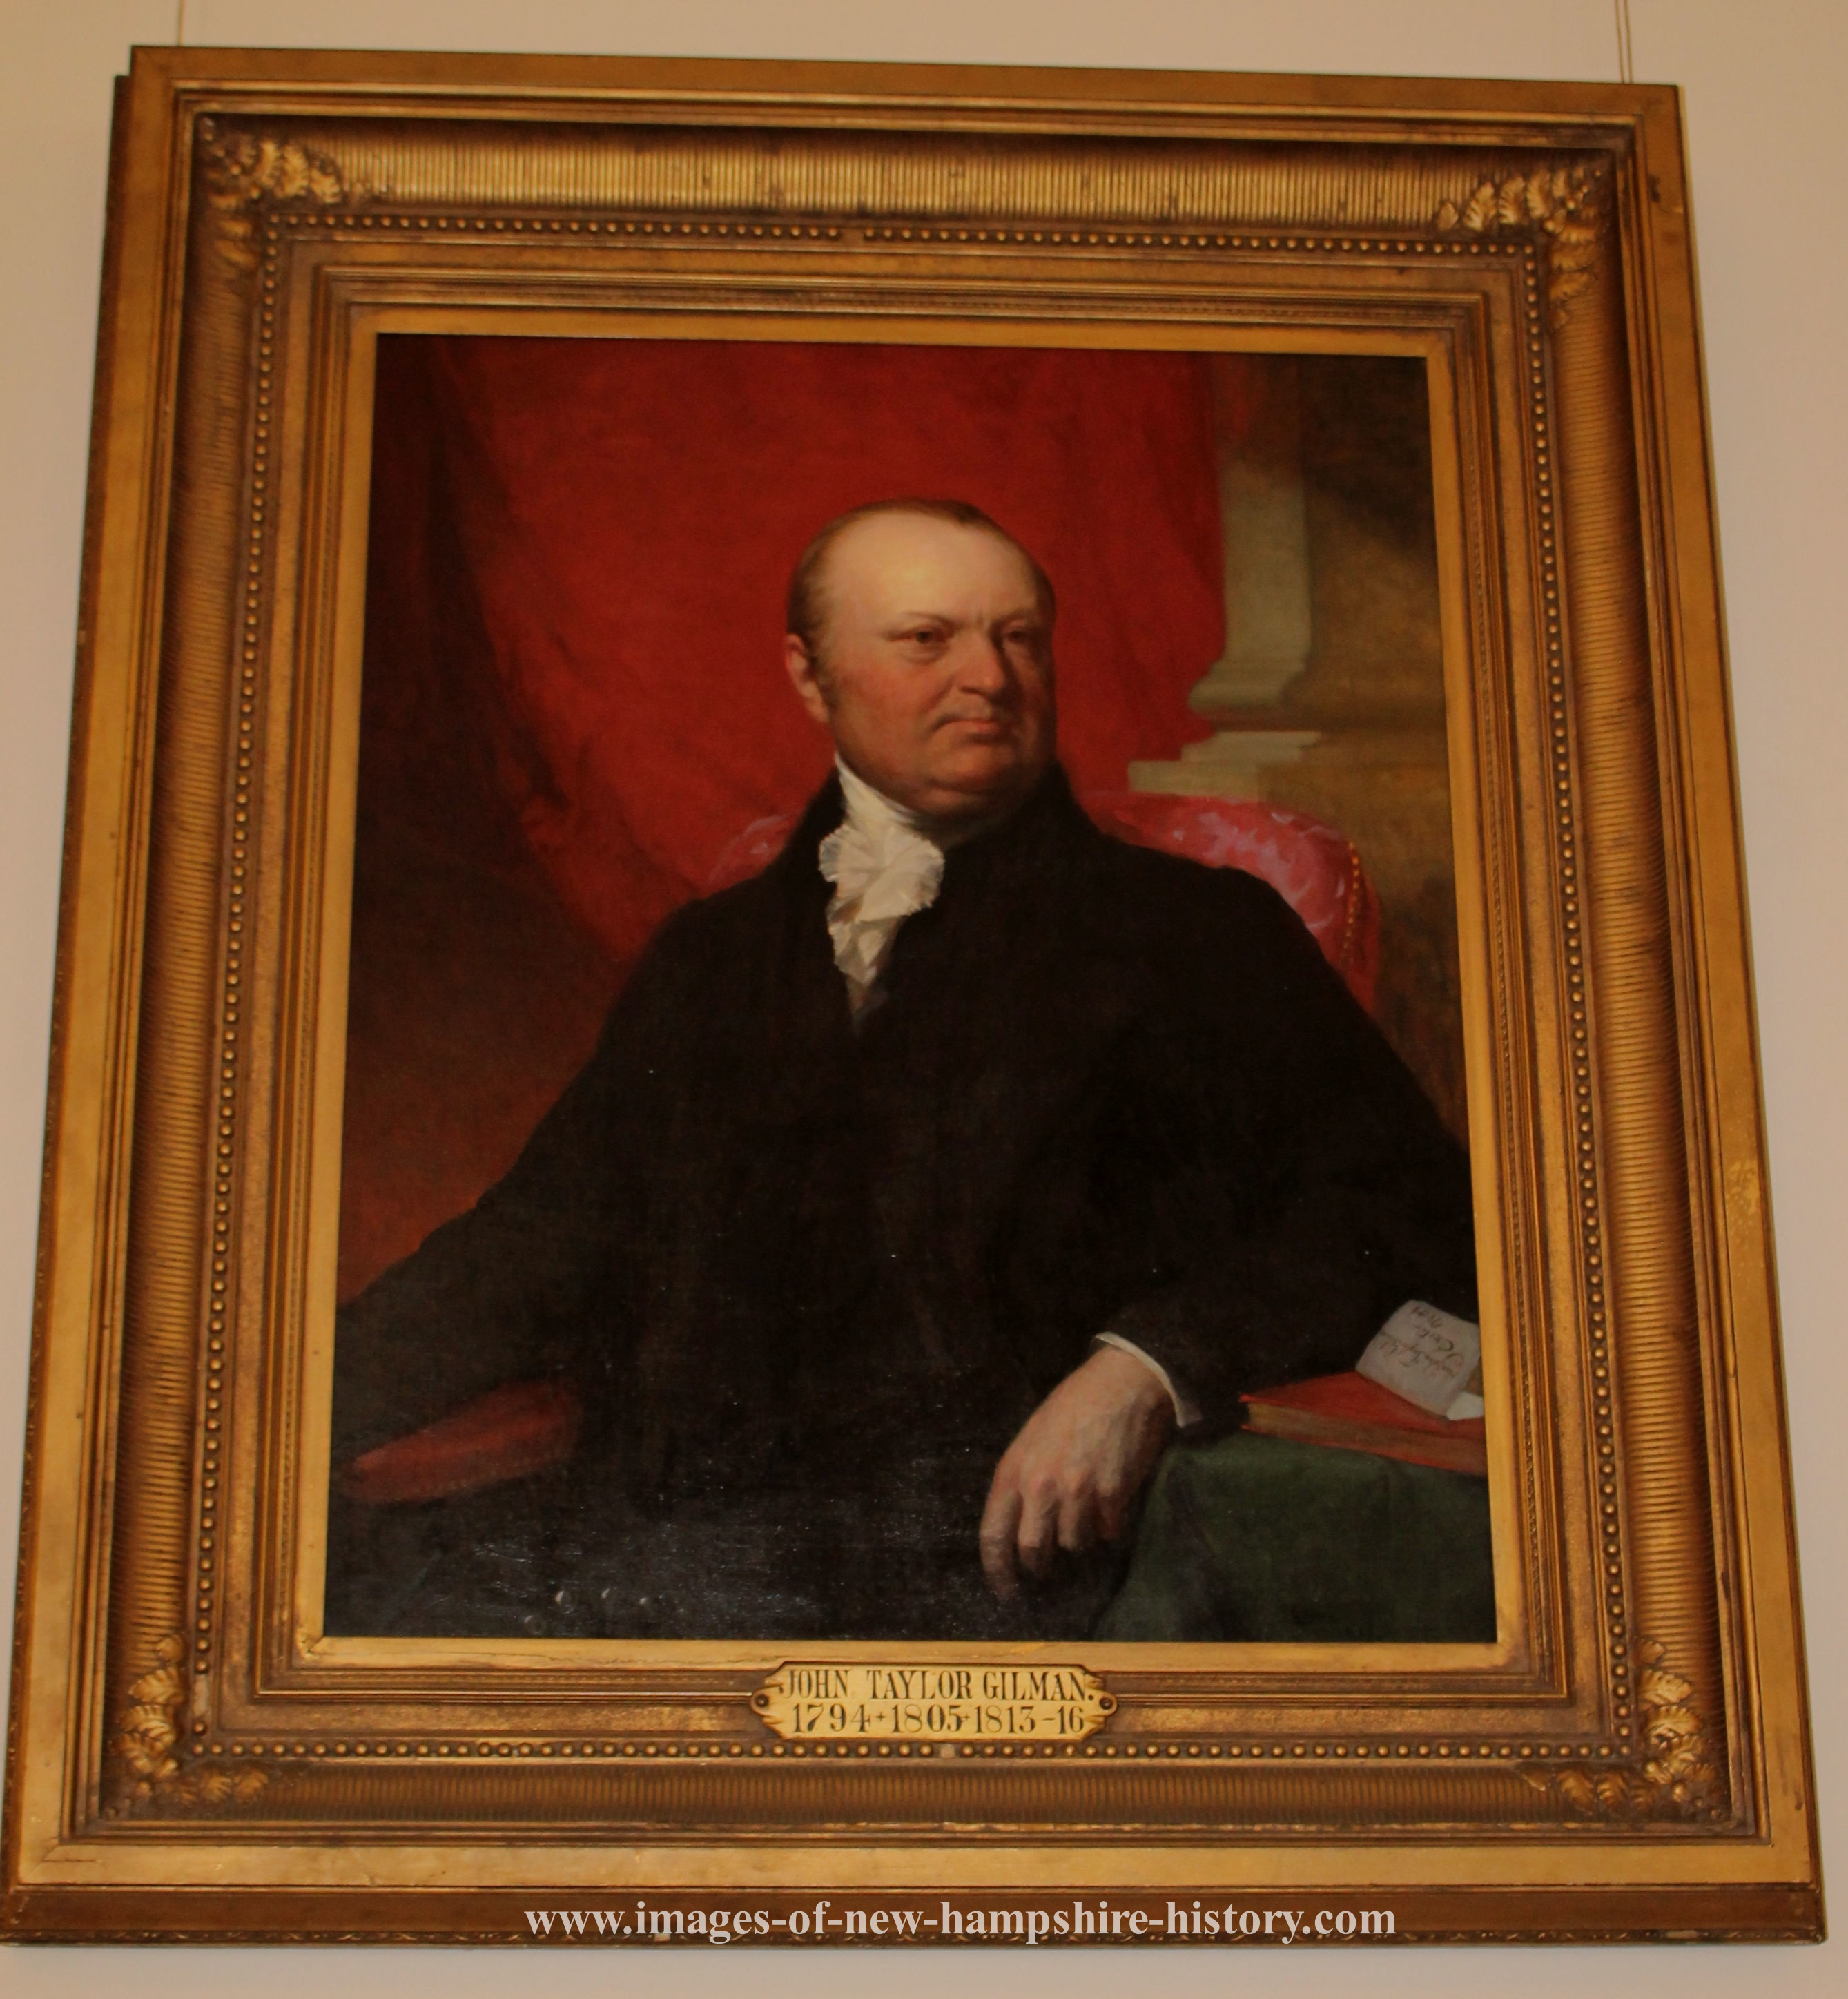 Governor John Gilman Nh State House Portrait